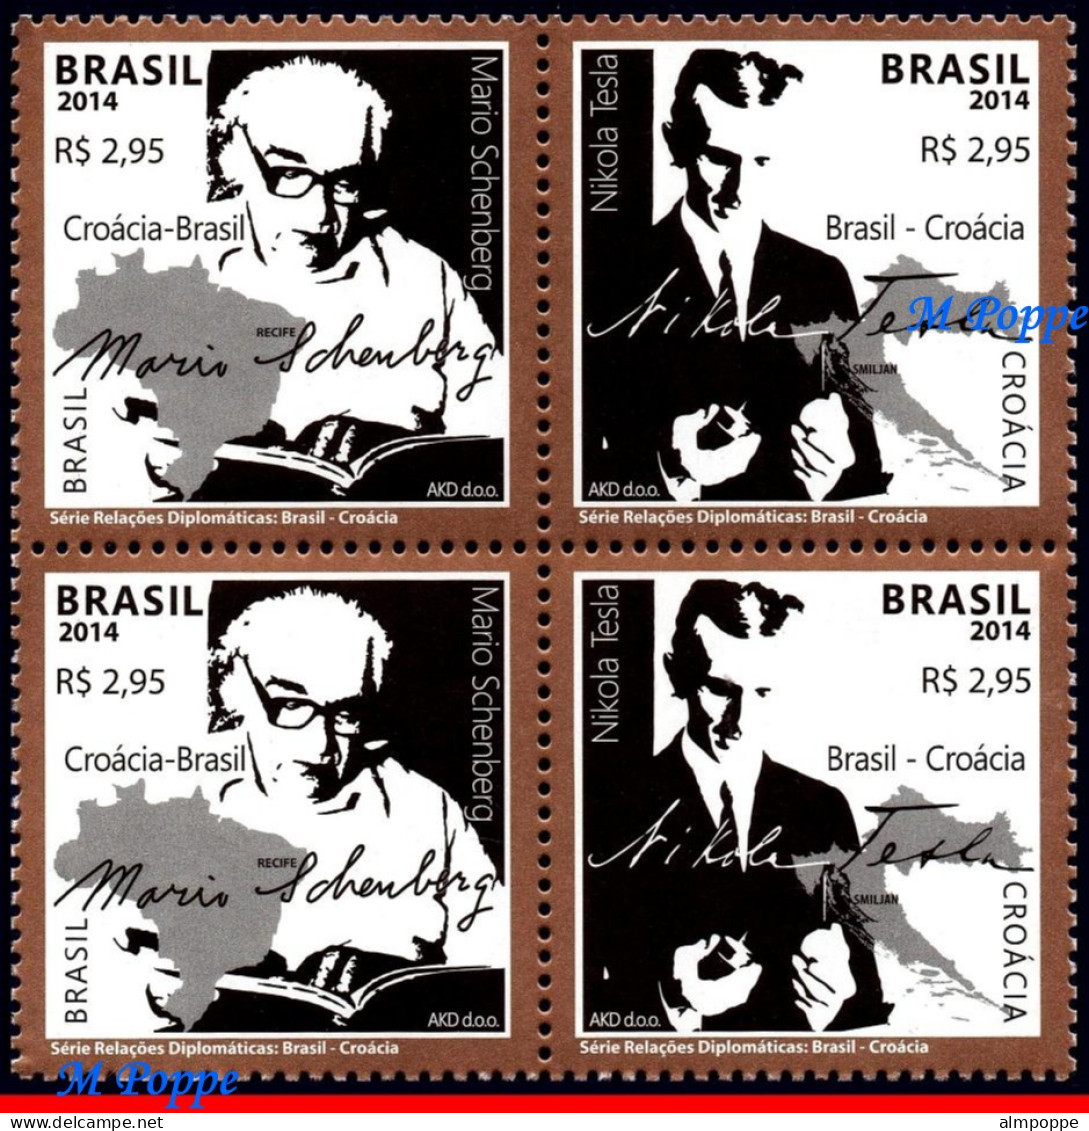 Ref. BR-3286-Q BRAZIL 2014 - RELATIONSHIP WITH CROATIA, M�RIO SCHENBERG & NIKOLA TESLA, MNH, FAMOUS PEOPLE 4V Sc# 3286 - Blocks & Sheetlets